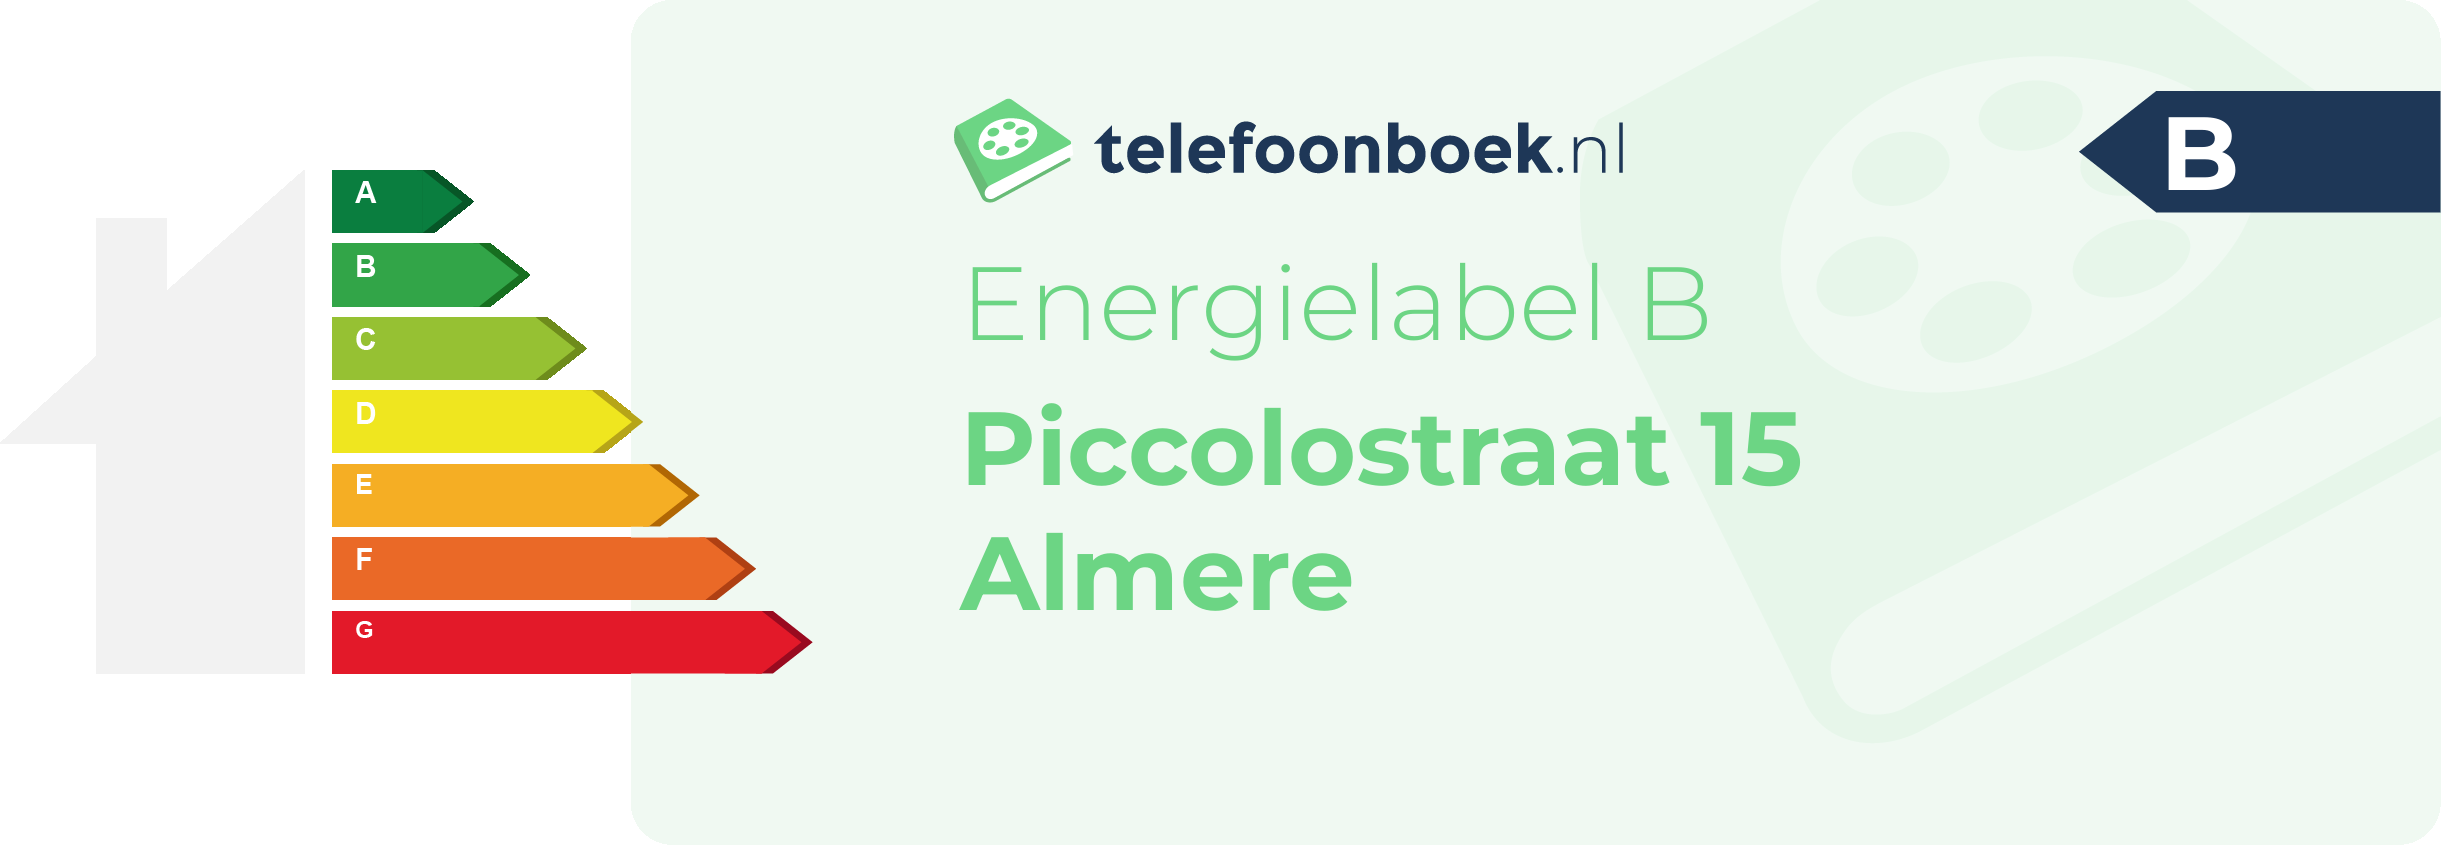 Energielabel Piccolostraat 15 Almere